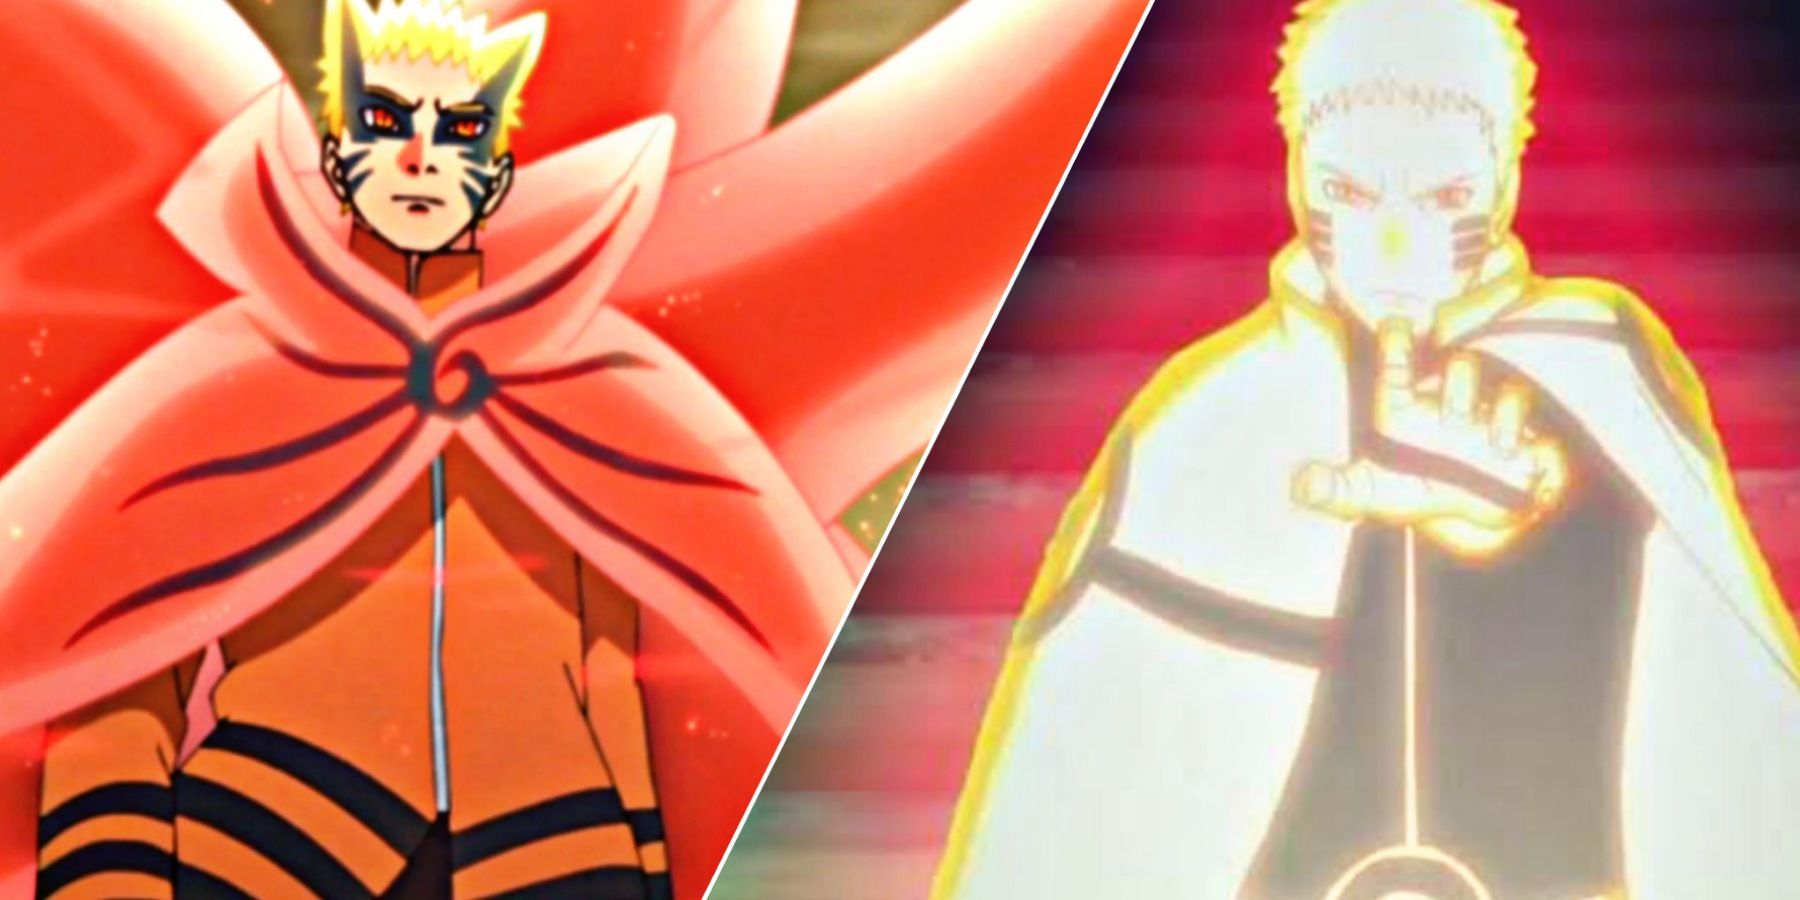 Hokage Naruto Uses Ultimate Sage Mode To Fight Code In Boruto